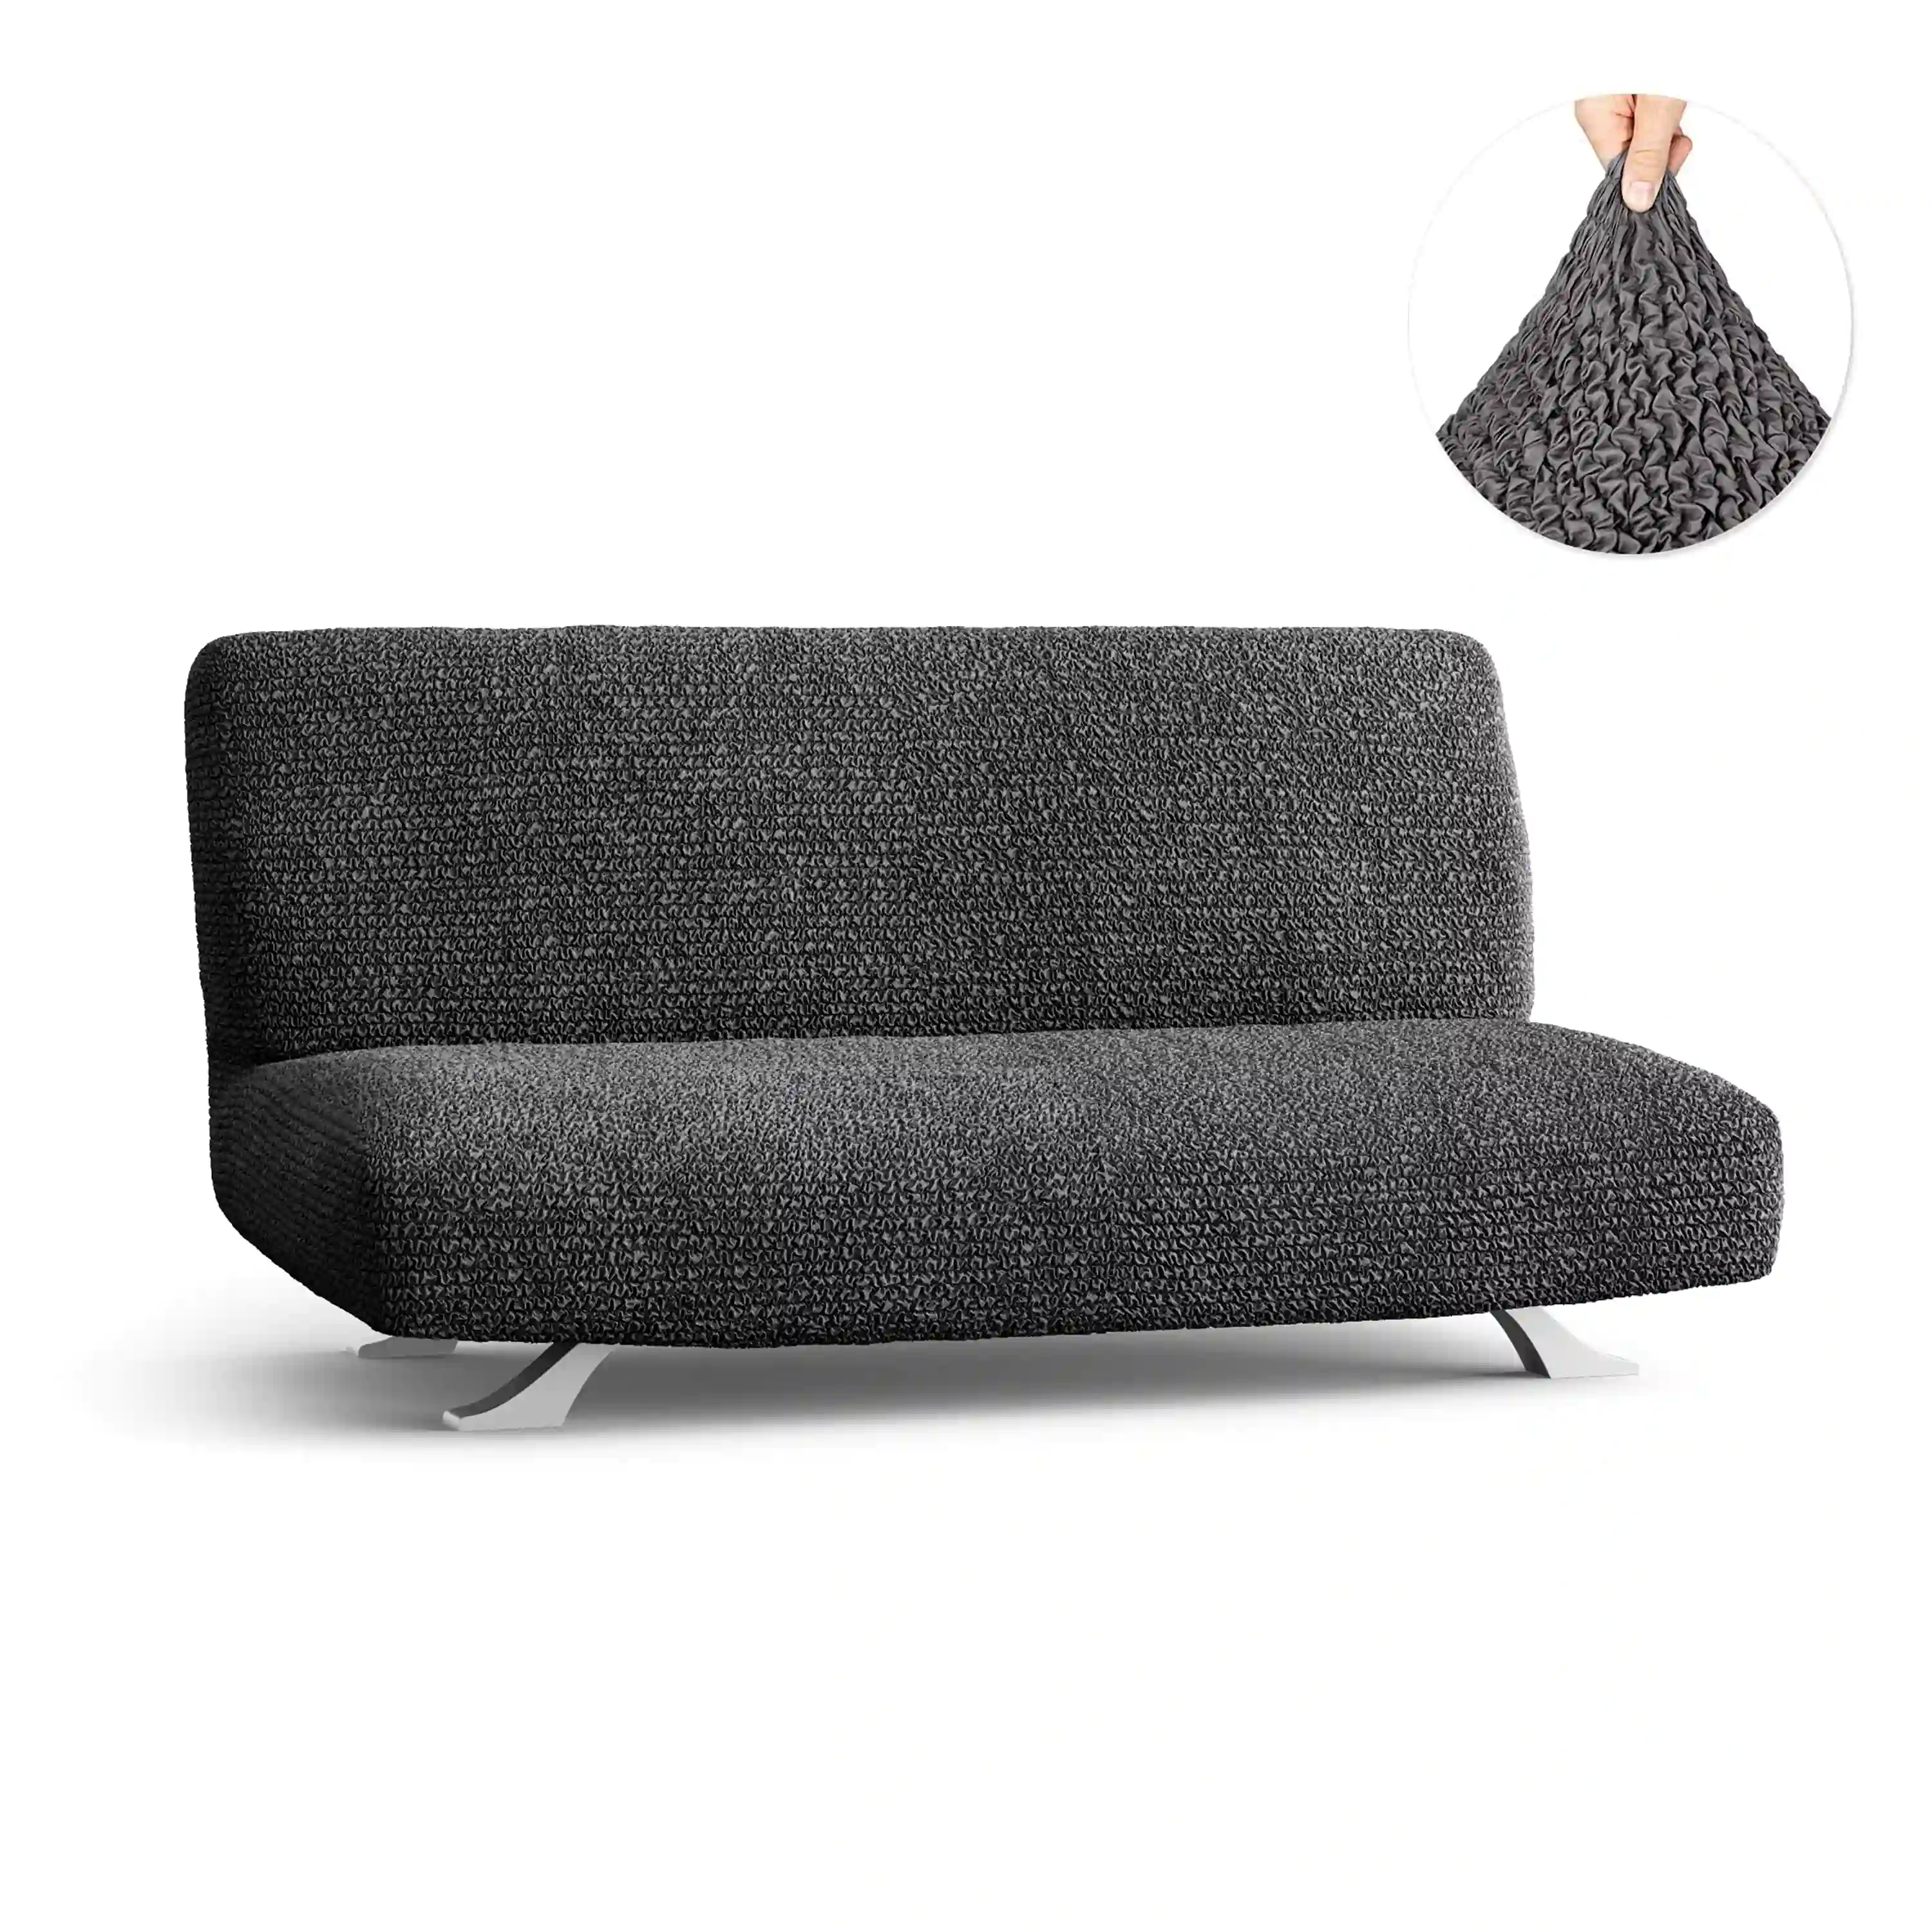 Futon Armless Sofa Bed Slipcover - Charcoal, Microfibra